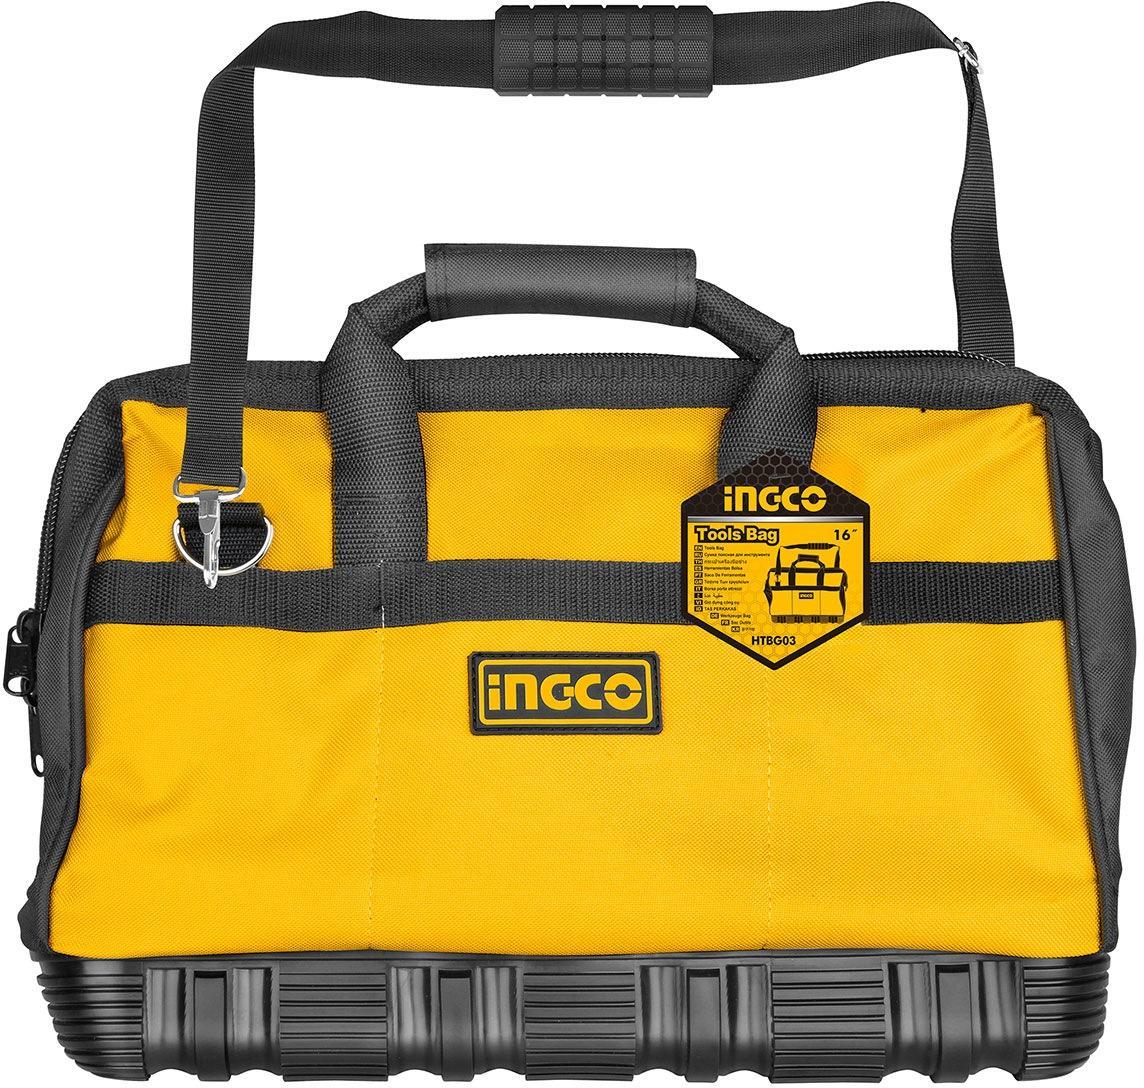 Ingco Tool Bag 400Mm W/Reinforced Base Trade - HTBG03